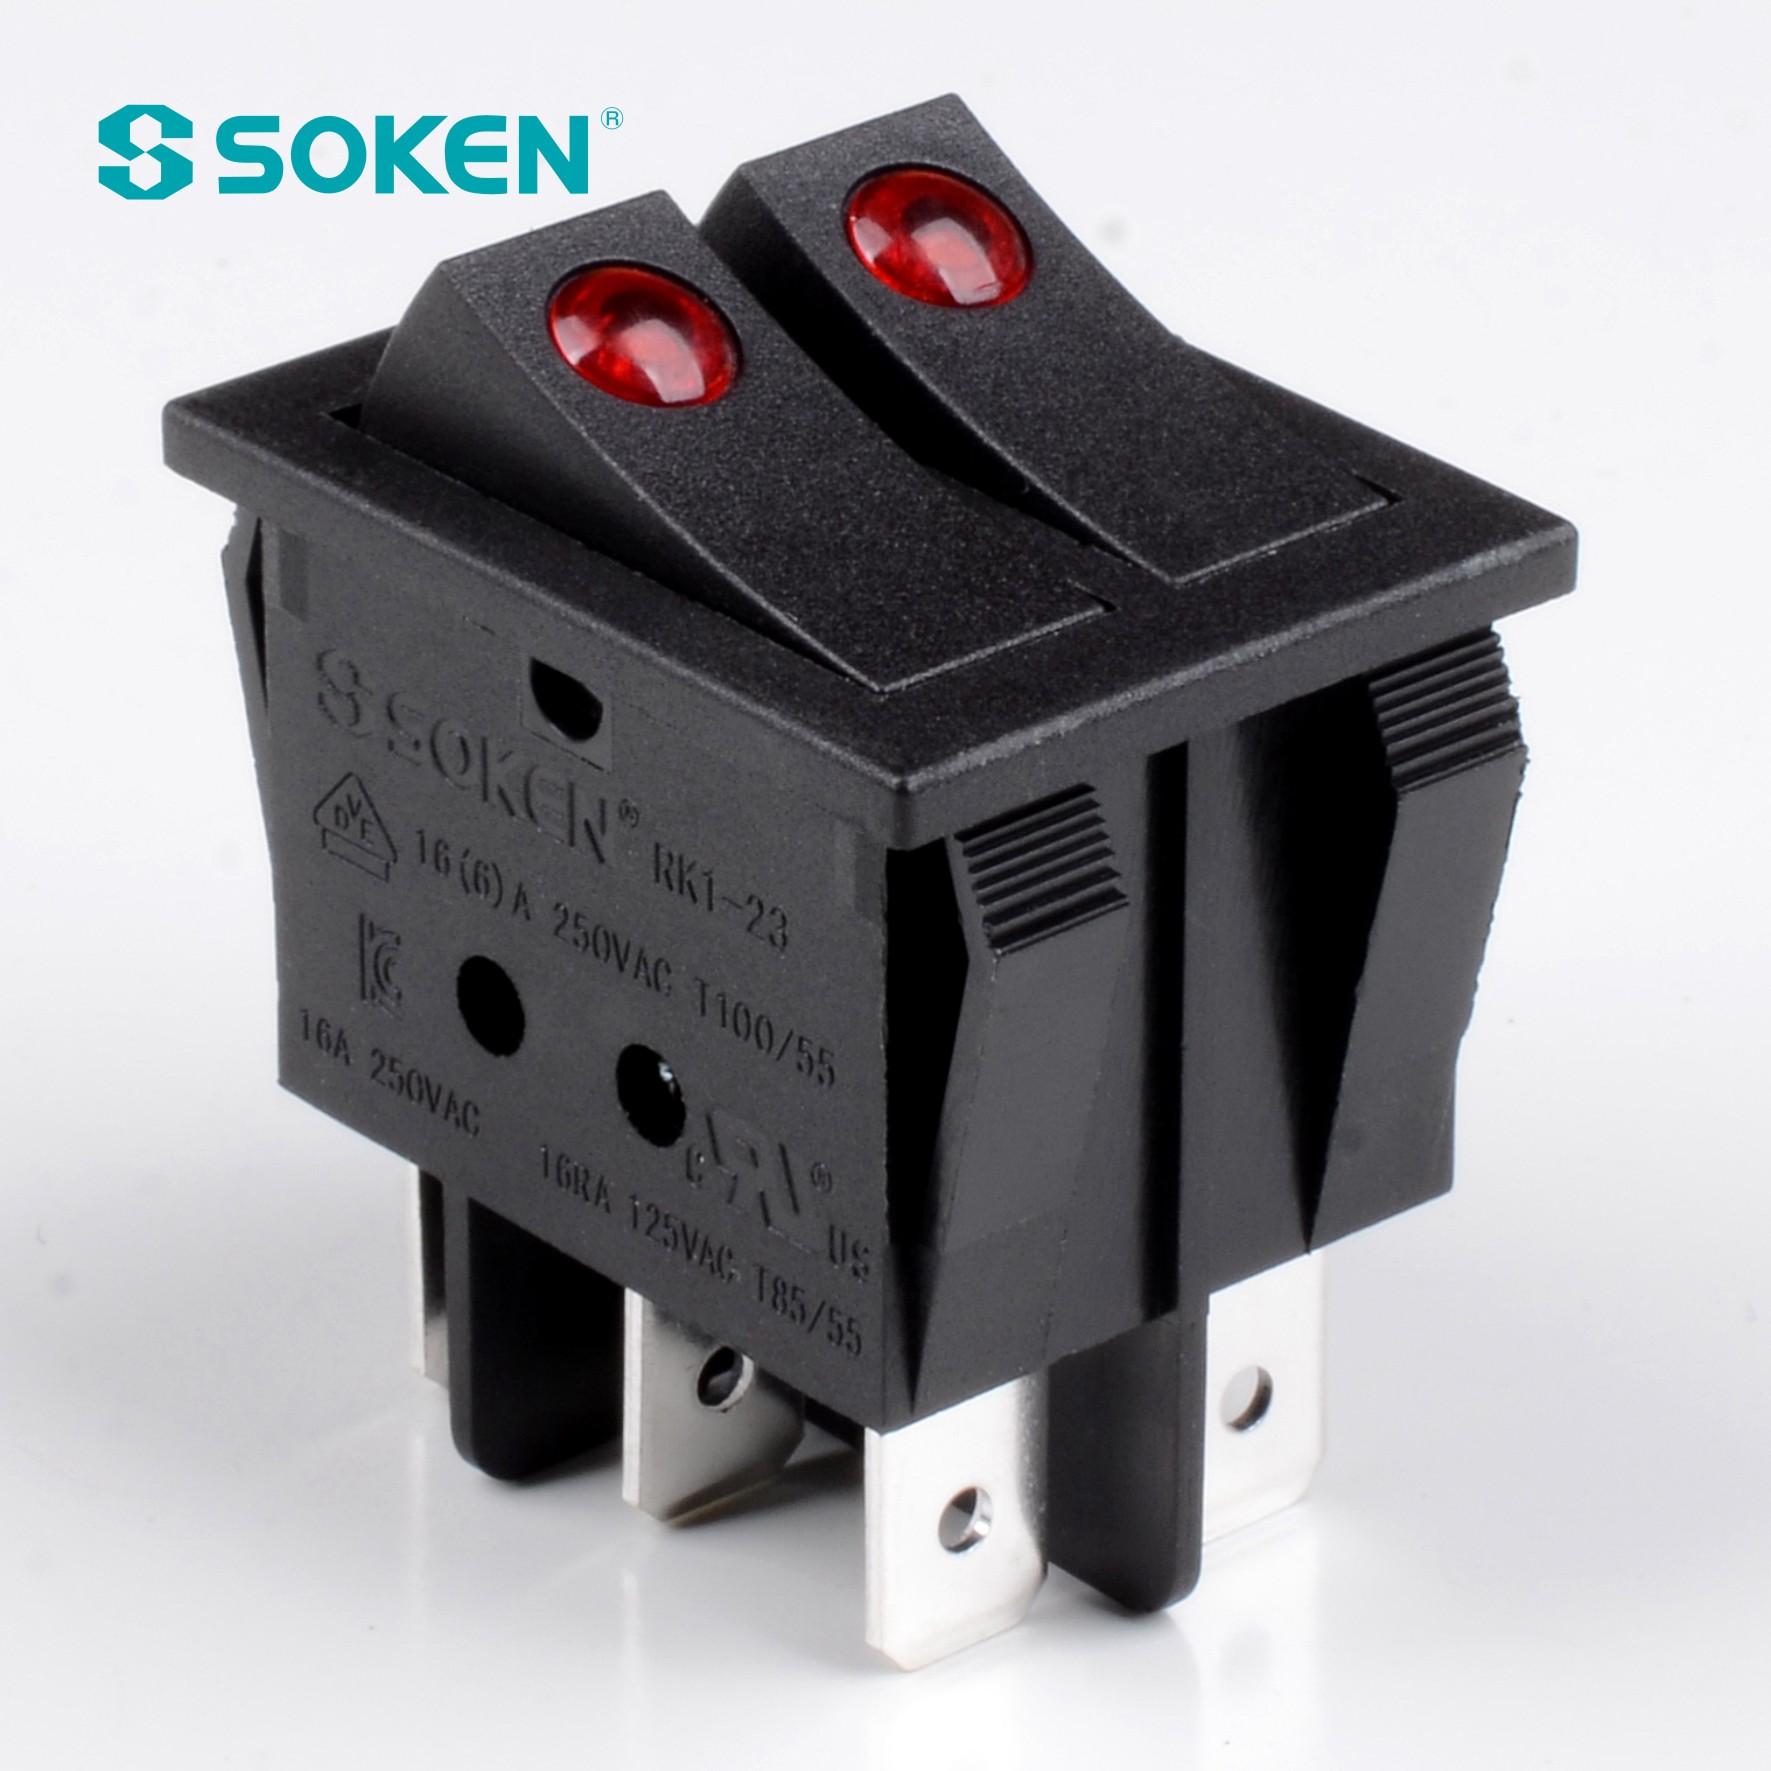 Soken Swichi CQC T100/55 Rocker Switch Kema Keur Switch